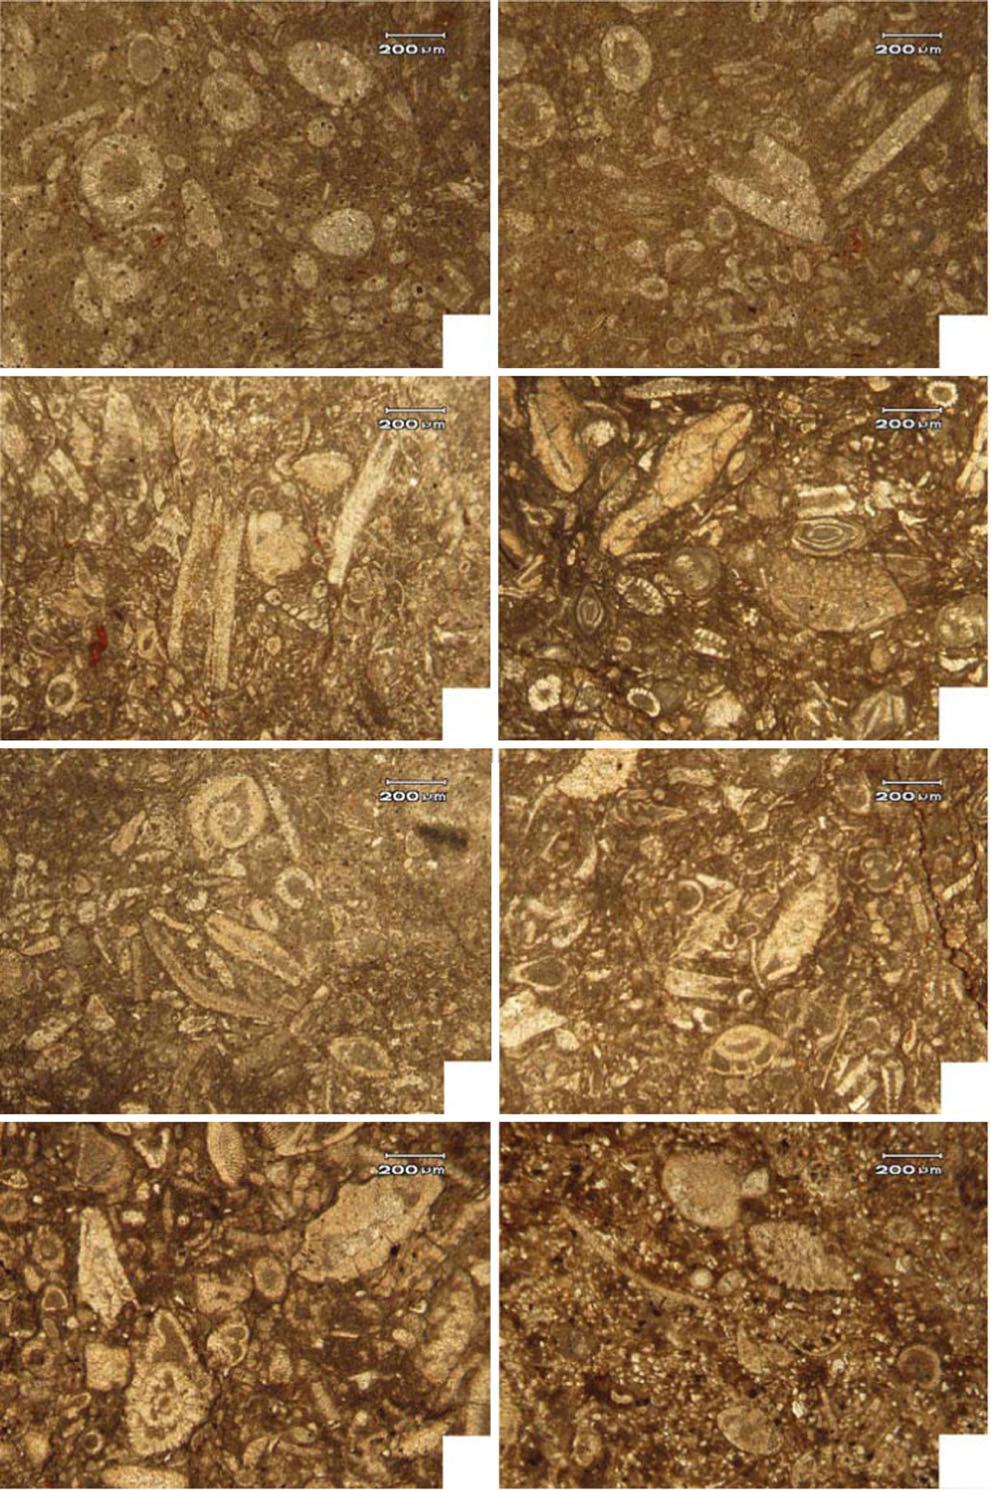 Cs a c Rh Ics b d Ms e Lt f Ms Ms g h Plate 3 Photomicrographis showing microfacies of the Nammal Gorge Section, Upper Indus sin, western Salt Range (Pakistan); Figure a: oclastic dasycladale